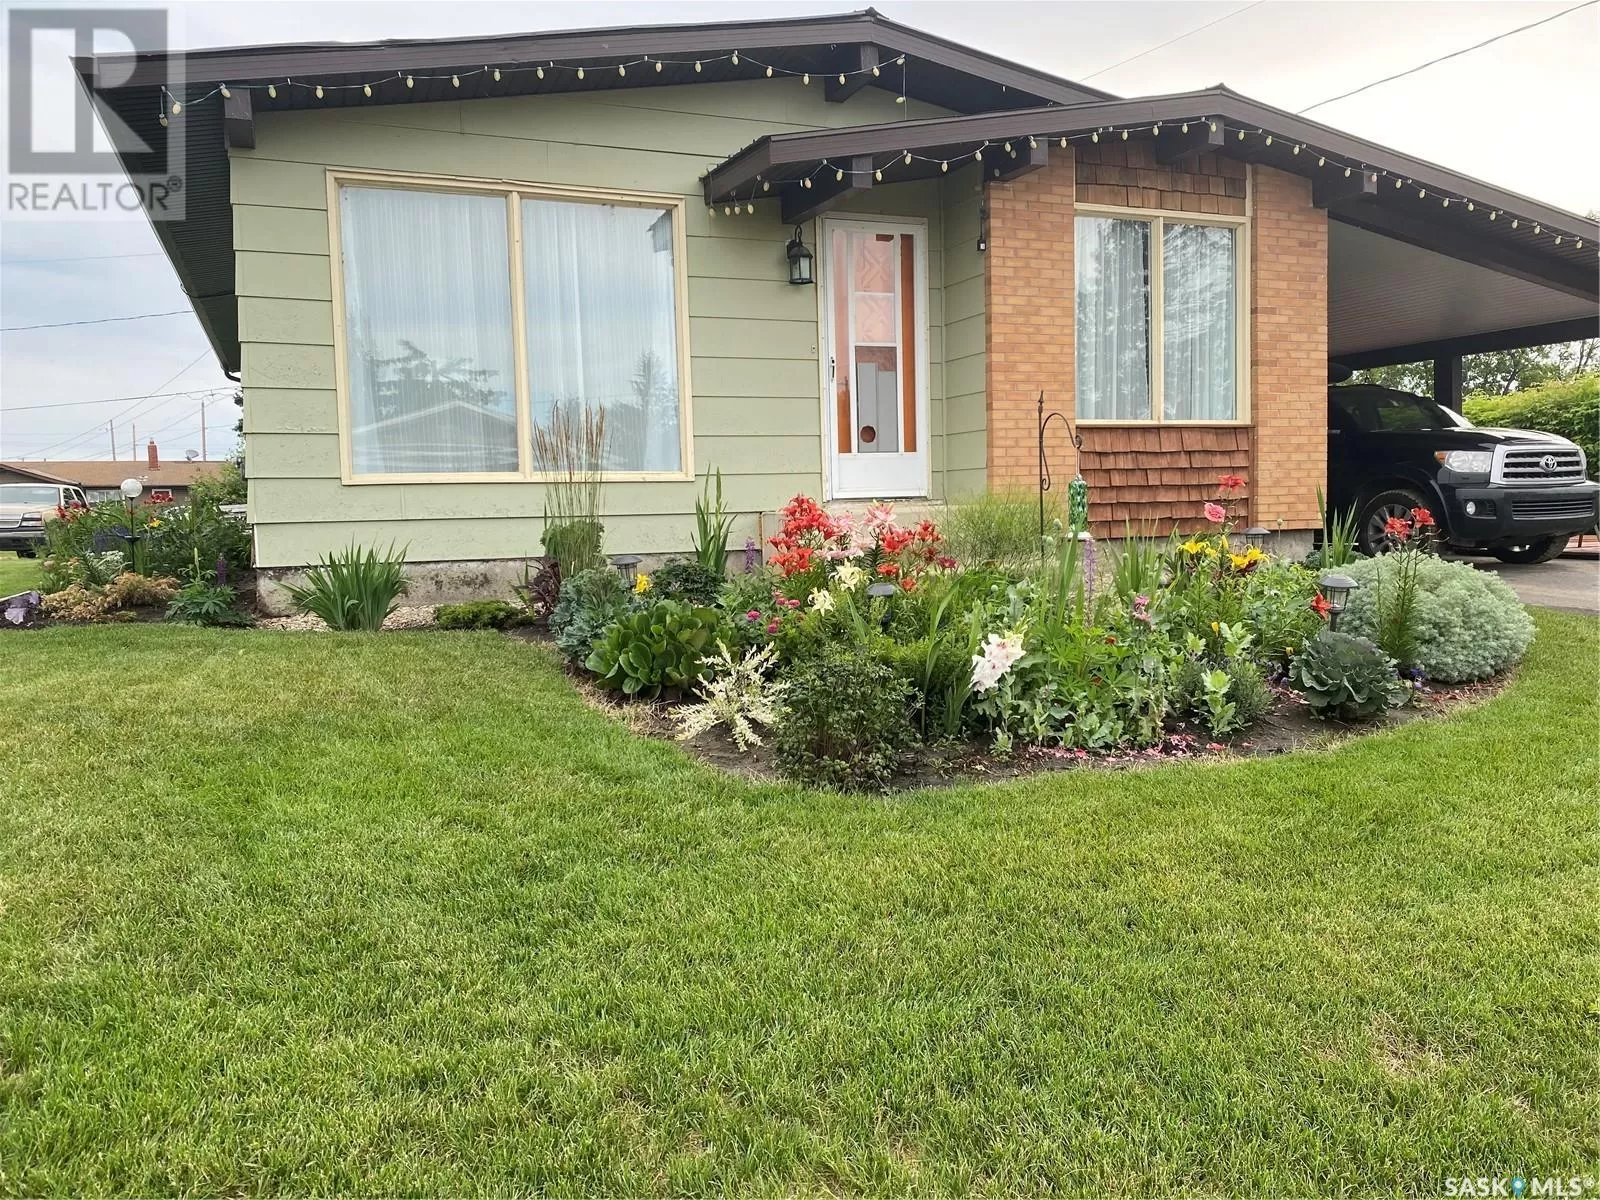 House for rent: 300 3rd Avenue W, Debden, Saskatchewan S0J 0S0